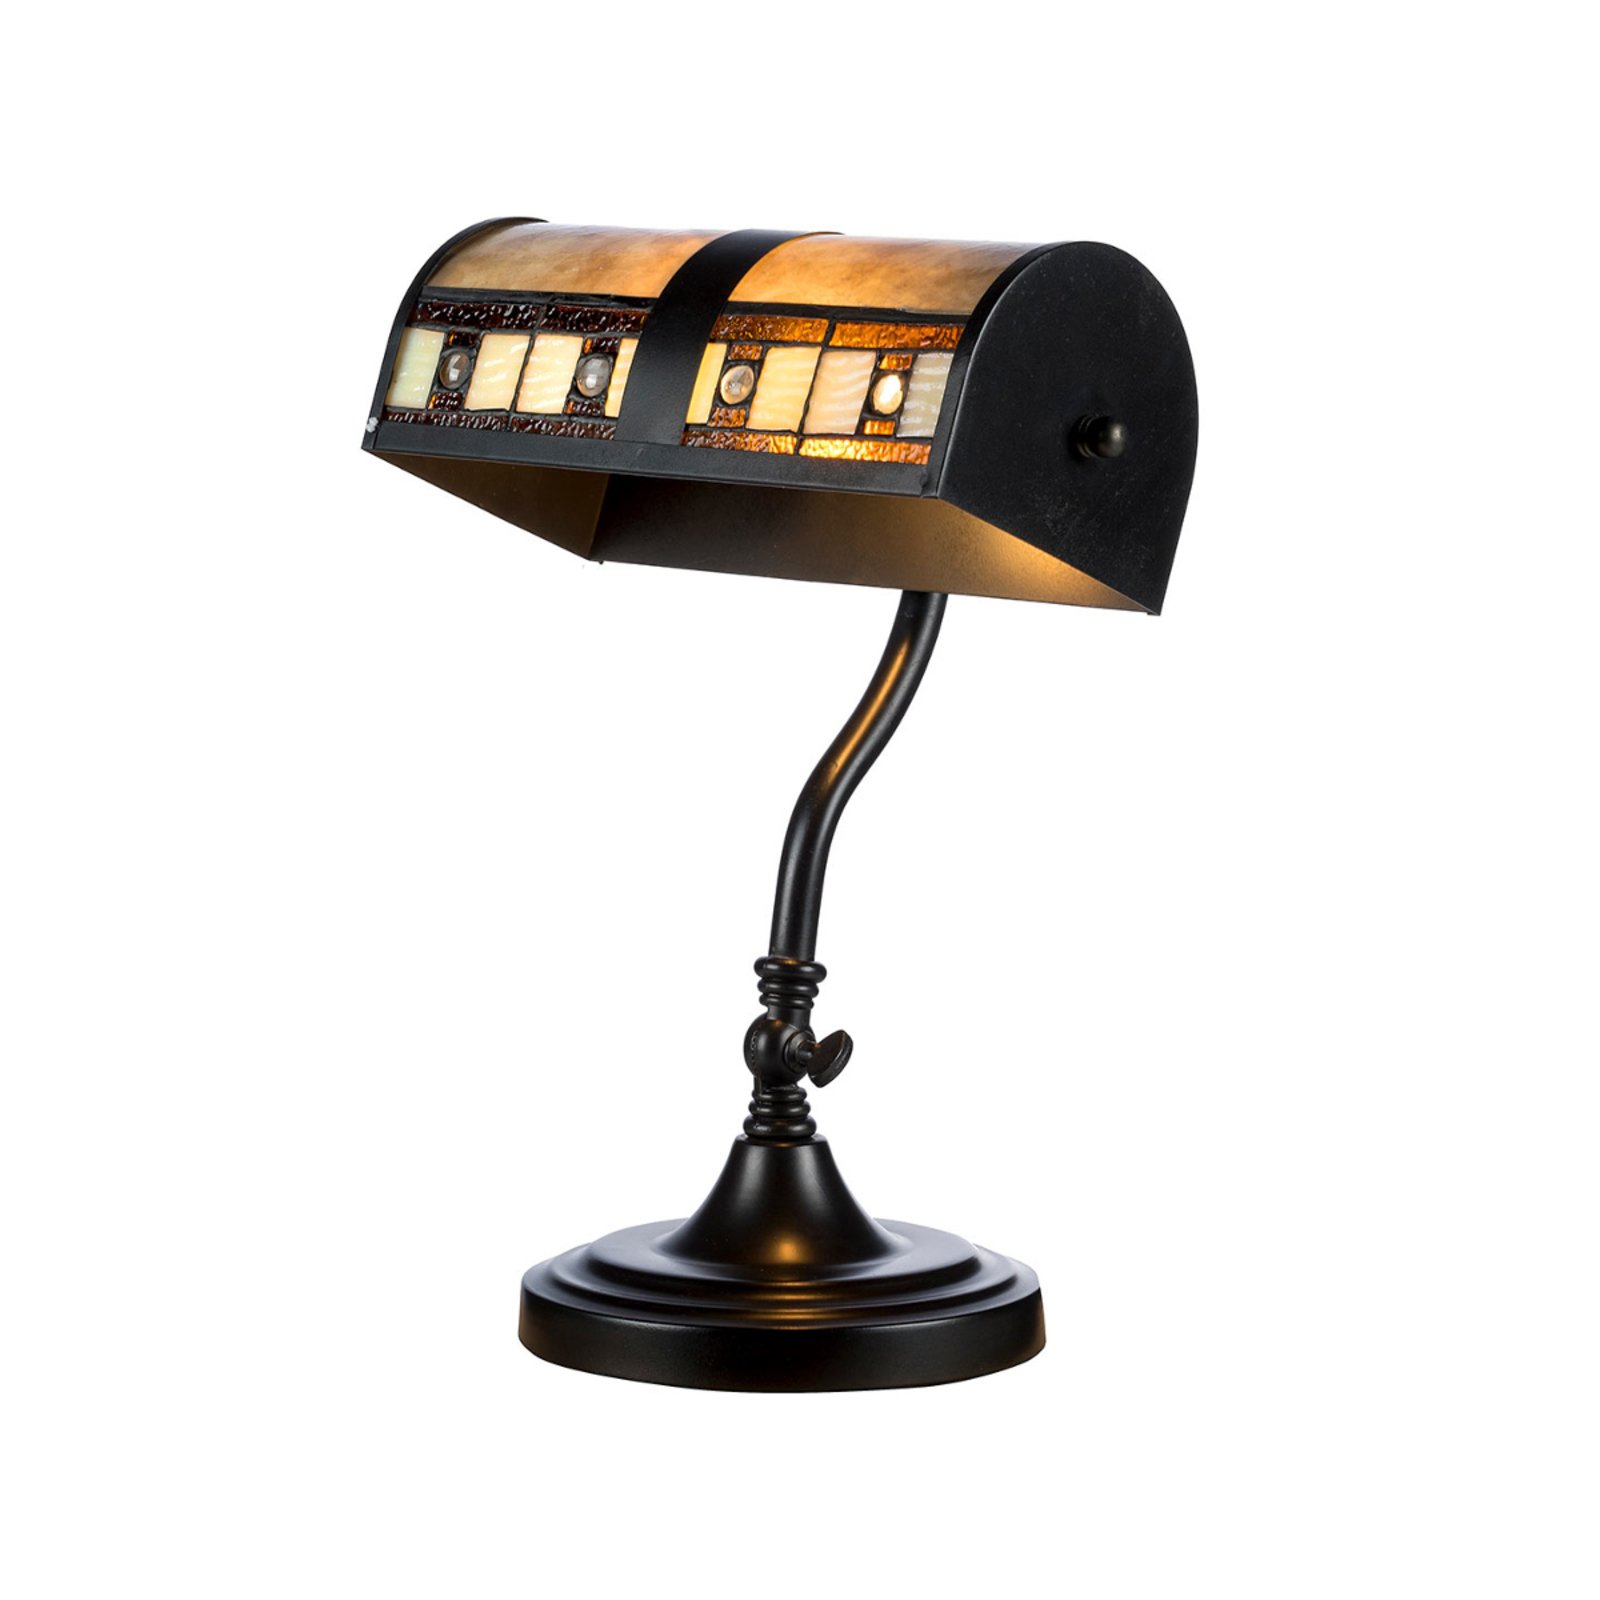 KT4613 table lamp in Tiffany design